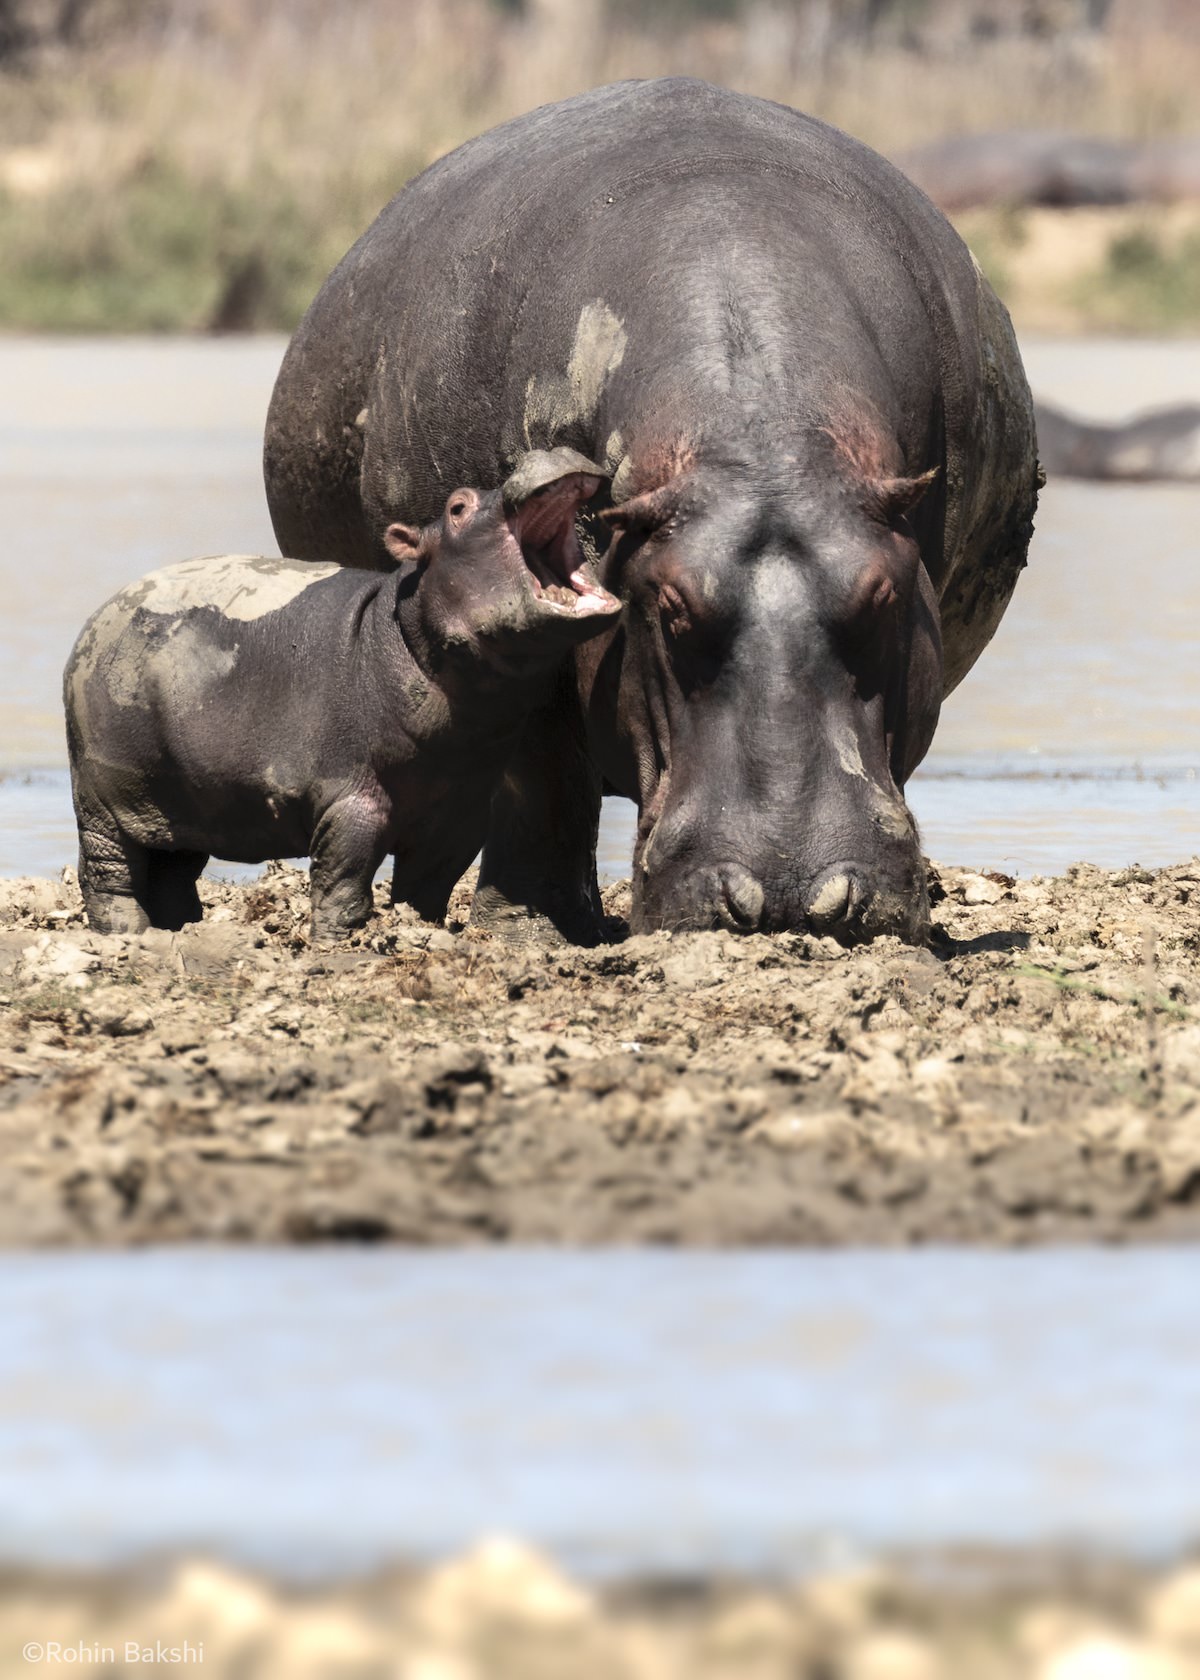 Rhinoceros / Rohin Bakshi / wildlife comedy photography contest